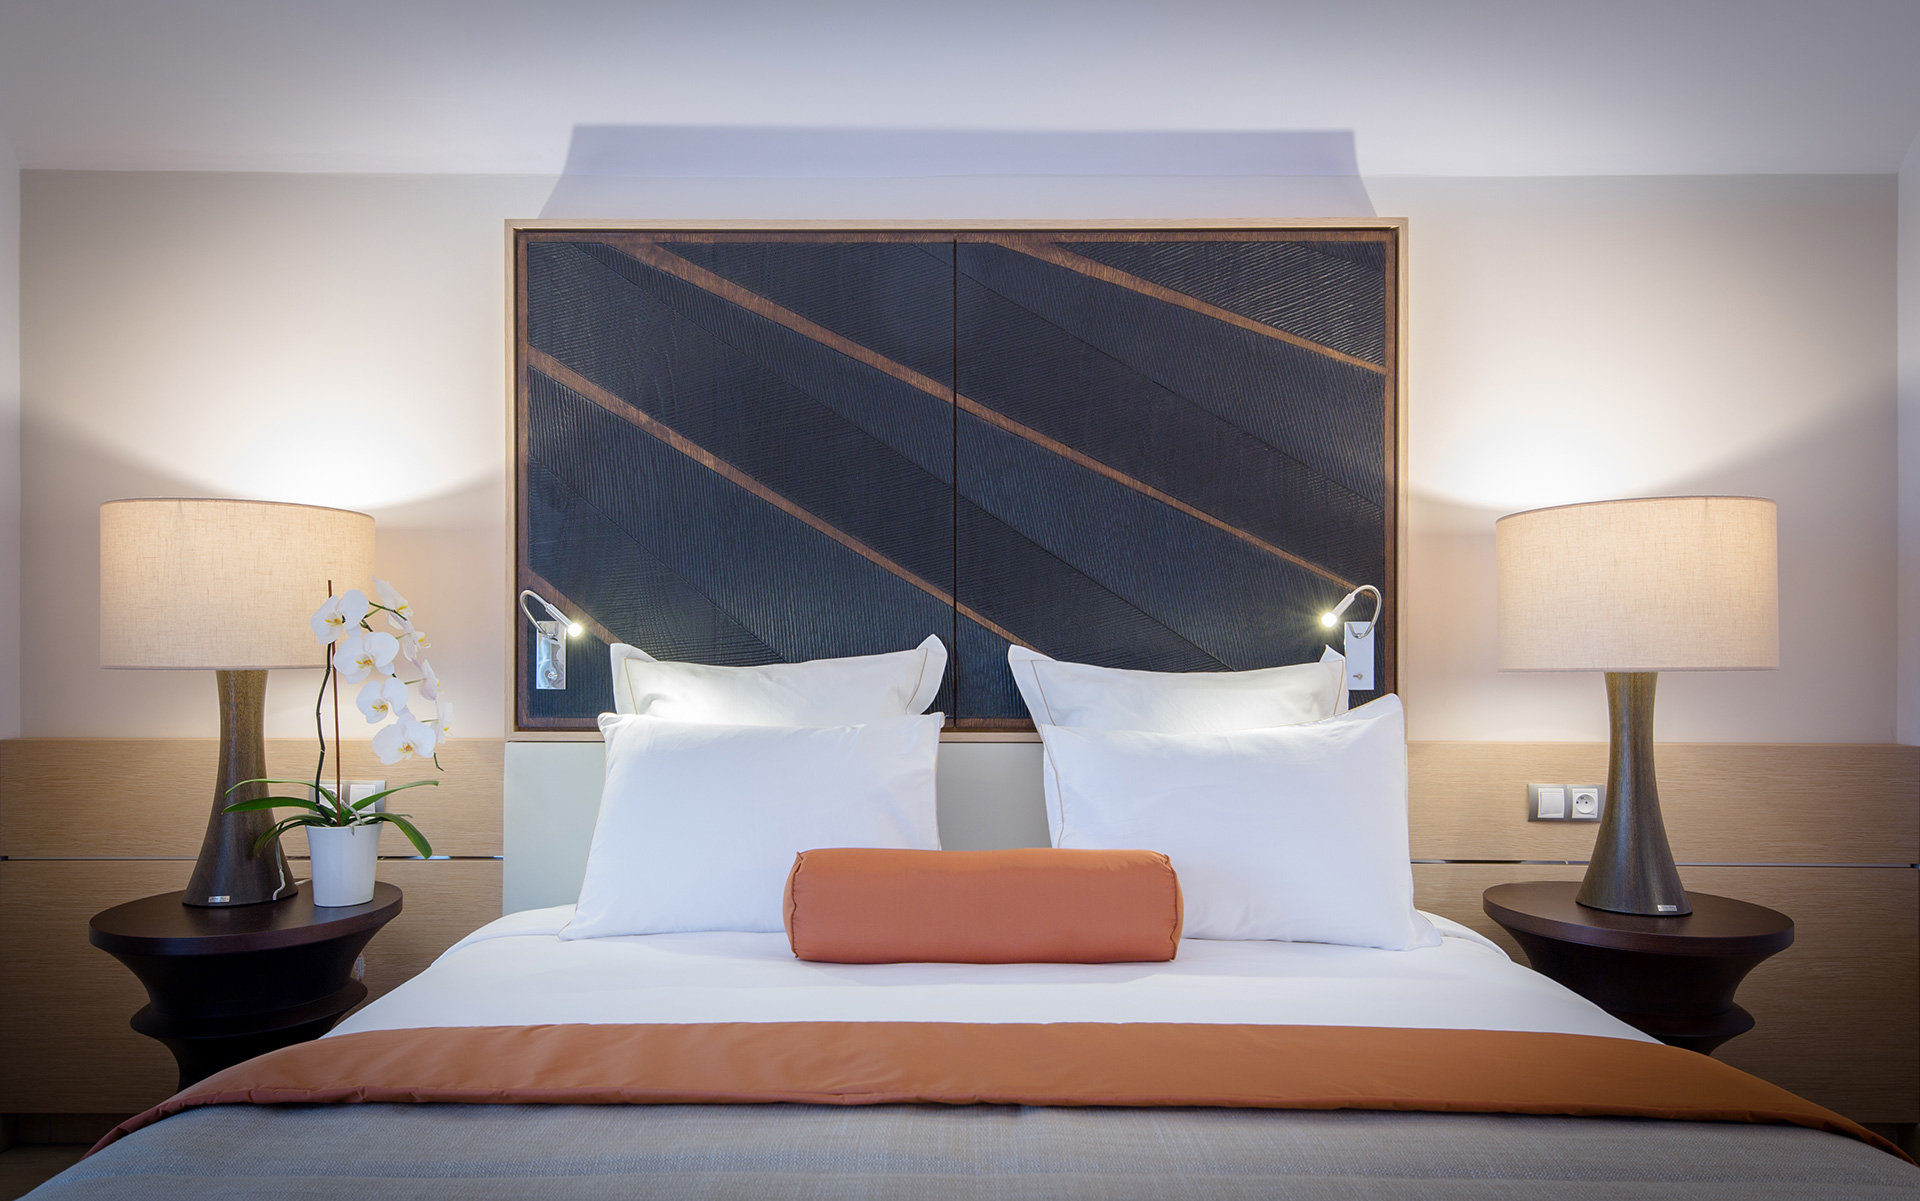 Fournaise bedroom for AKOYA Hôtel & Spa 5* by Borella Art Design